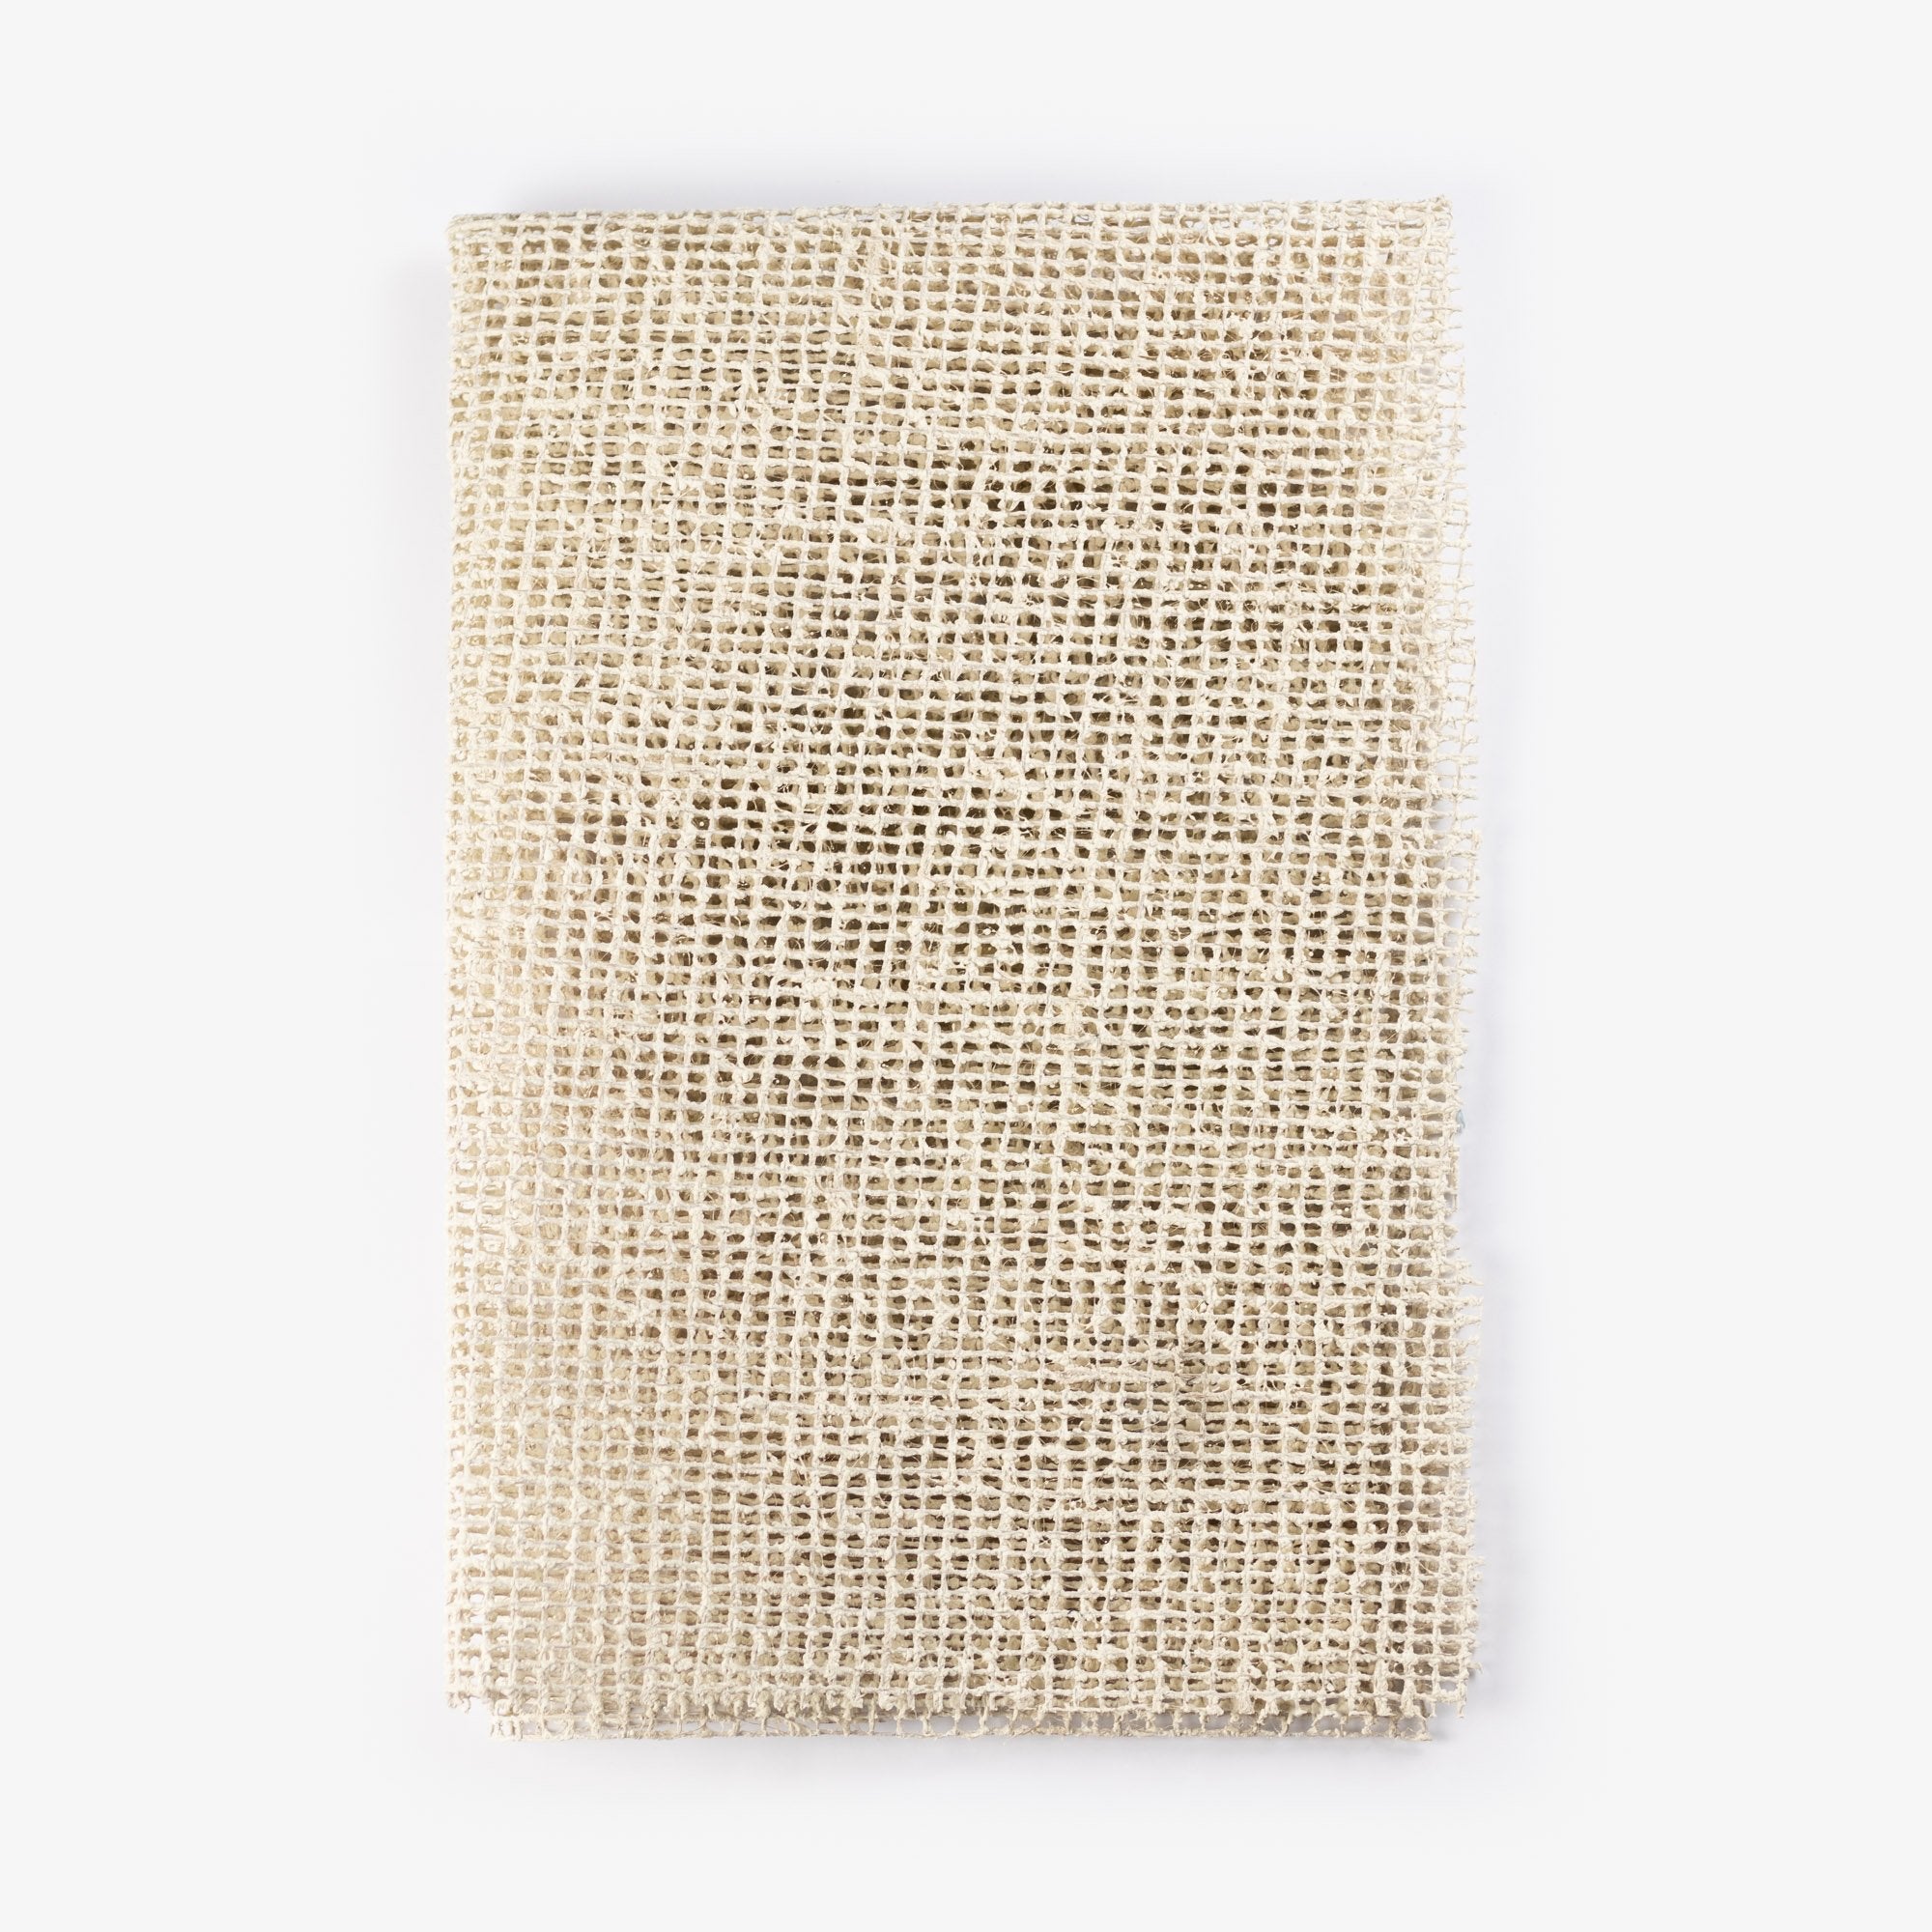 Rug Solid Mate de glissement de latex organique et jute, 60 x 130 cm